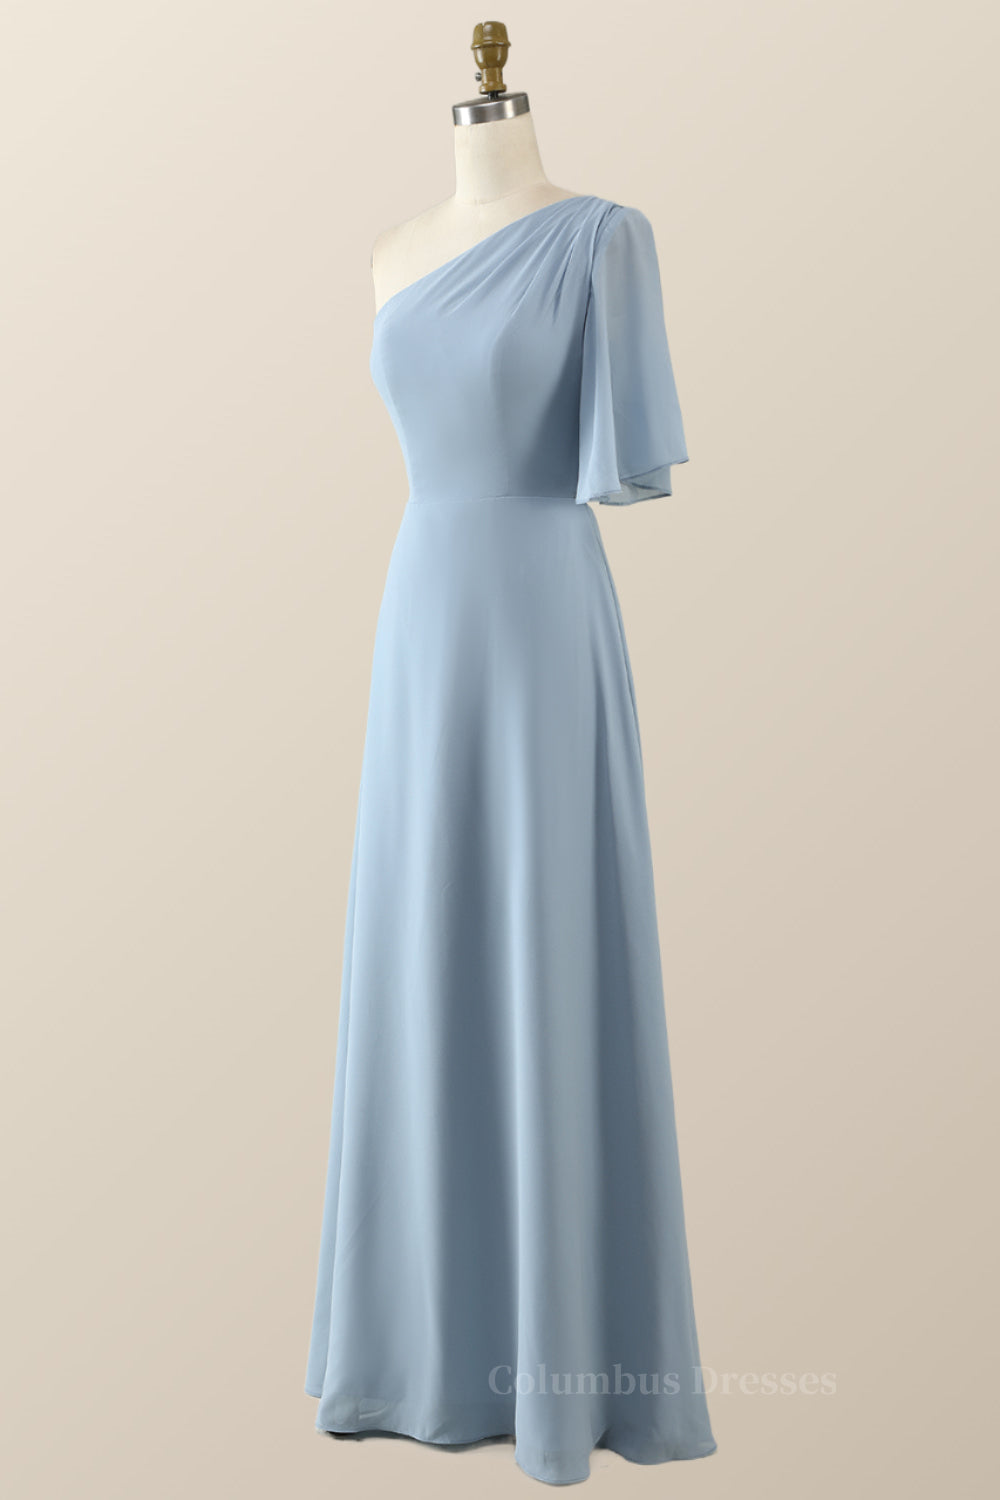 Homecoming Dresses Sage Green, One Shoulder Blue Chiffon Long Bridesmaid Dress